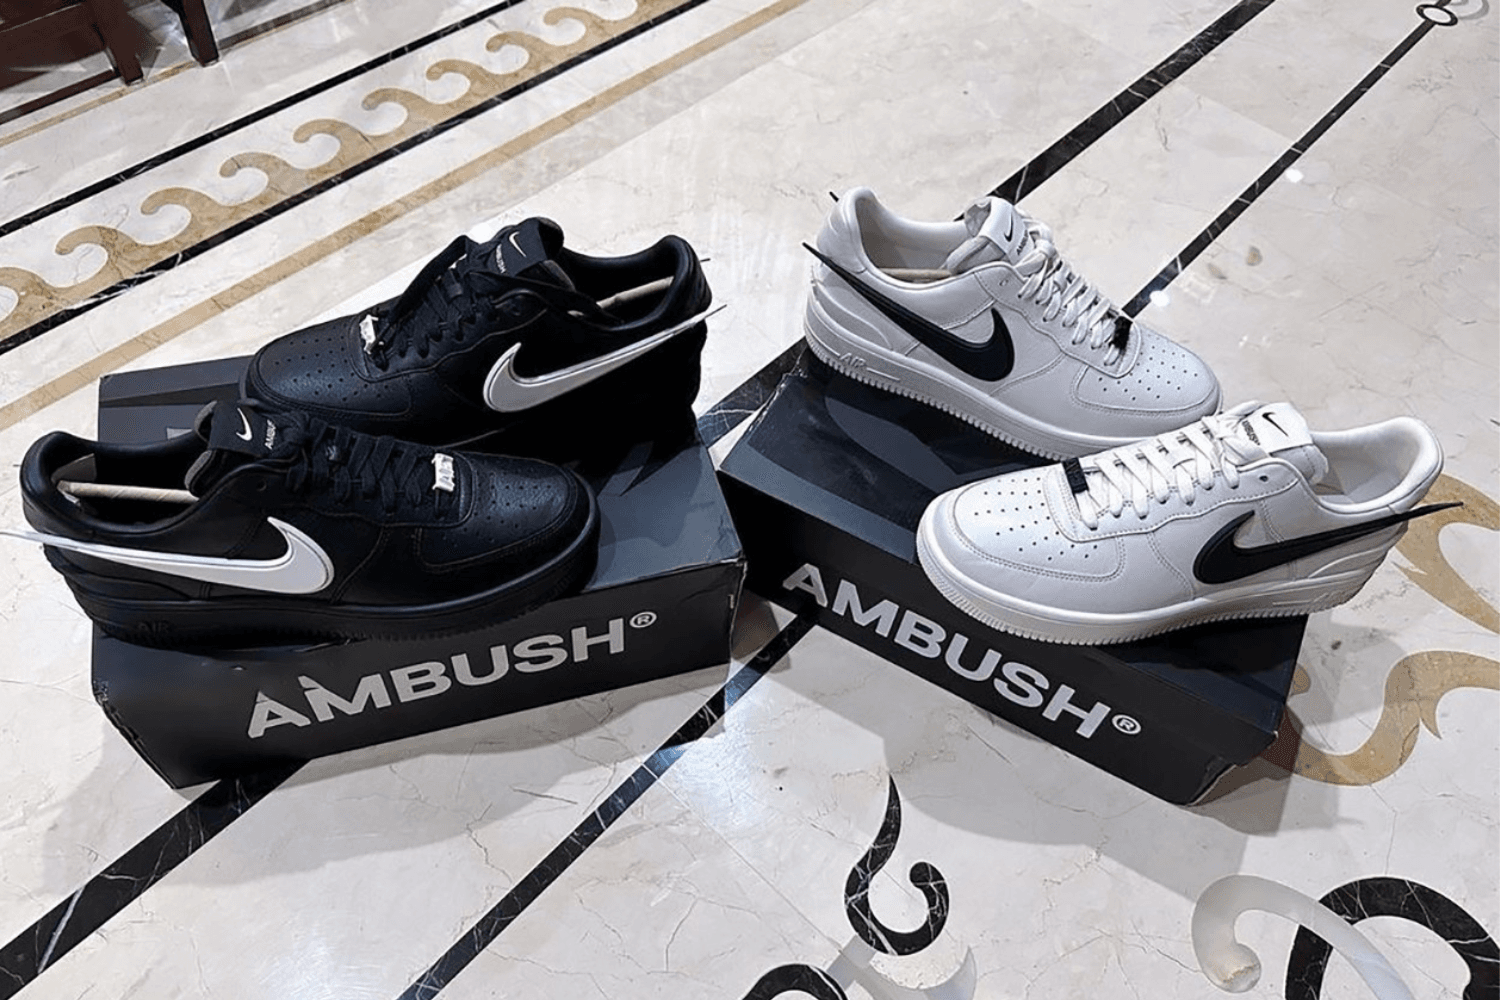 AMBUSH x Nike Air Force 1 Low comes in three colorways